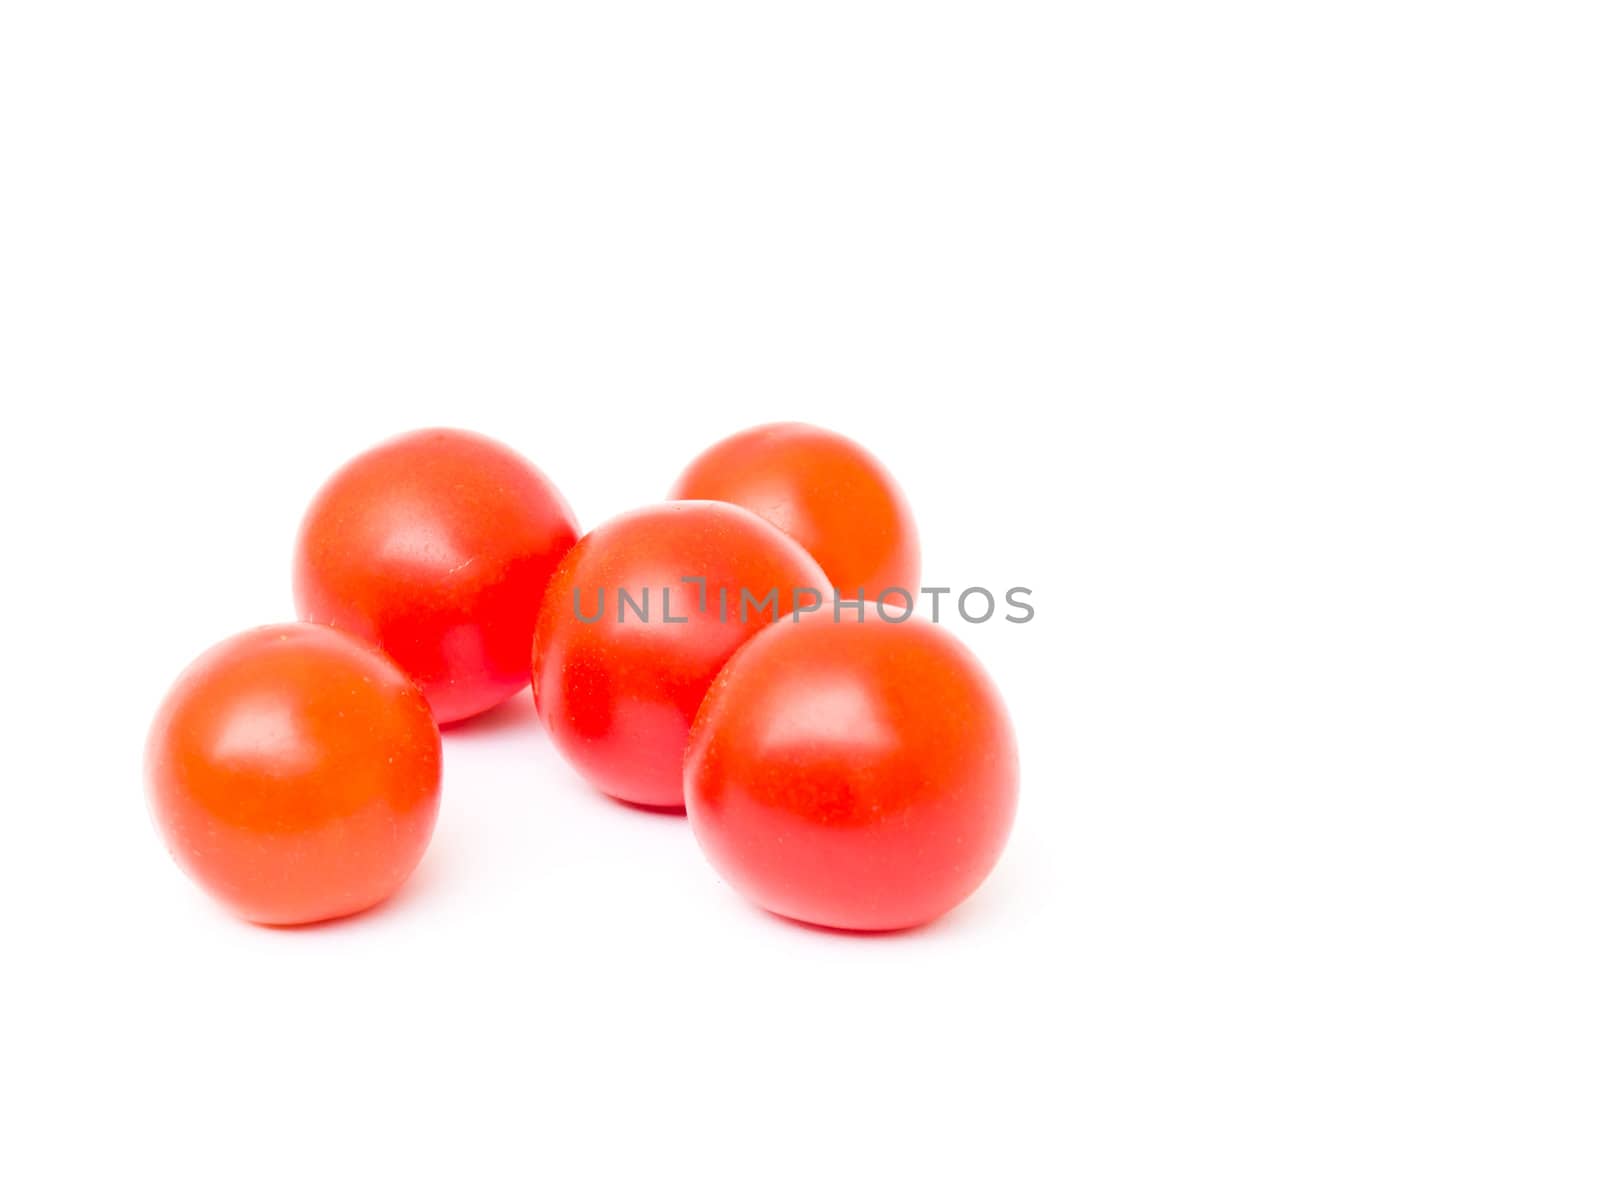 Cherry tomatoes isolated on white background by gururugu